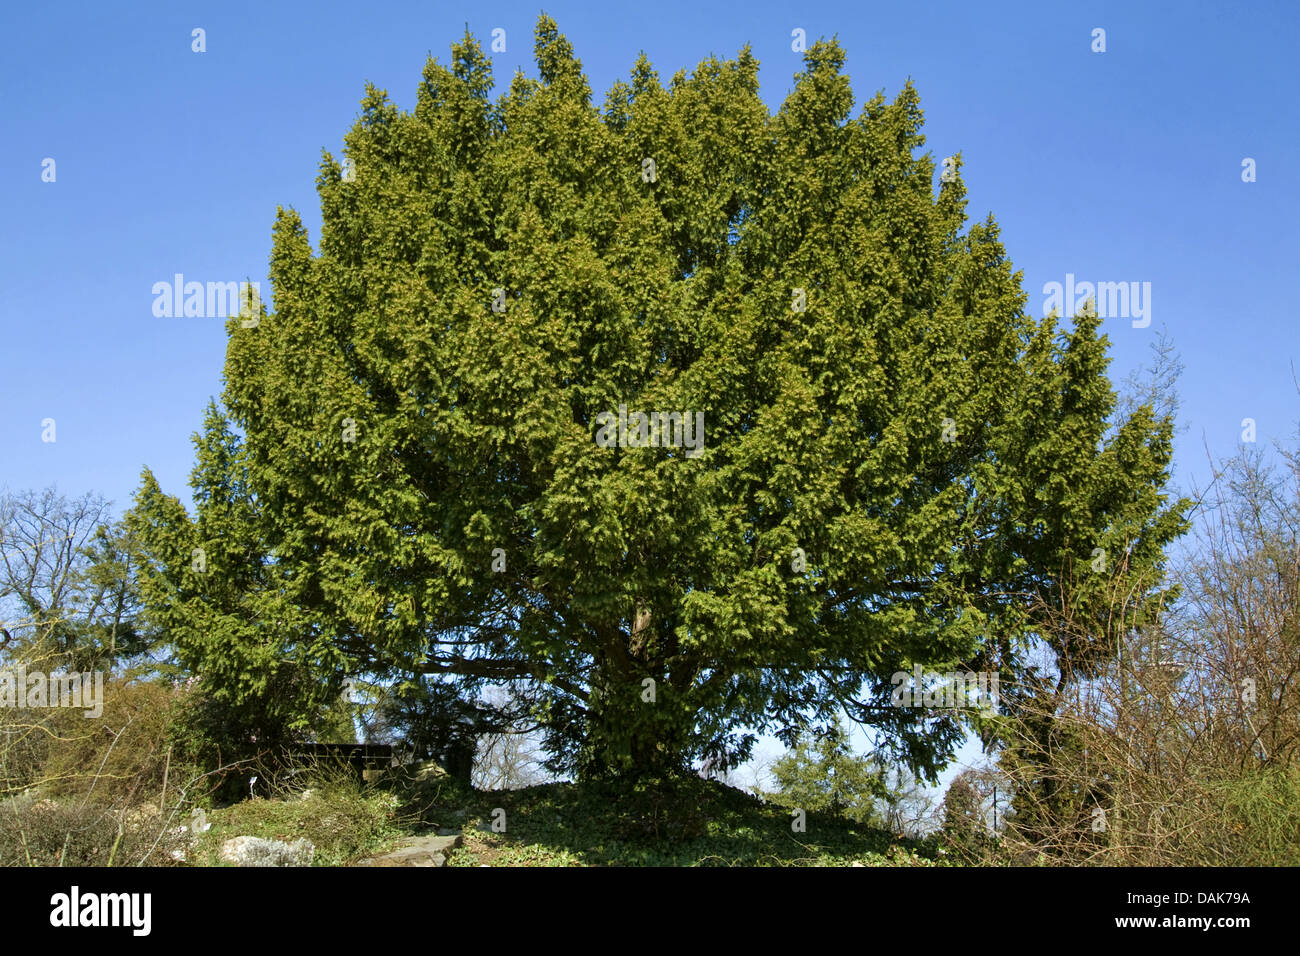 common yew (Taxus baccata), single tree, Germany Stock Photo